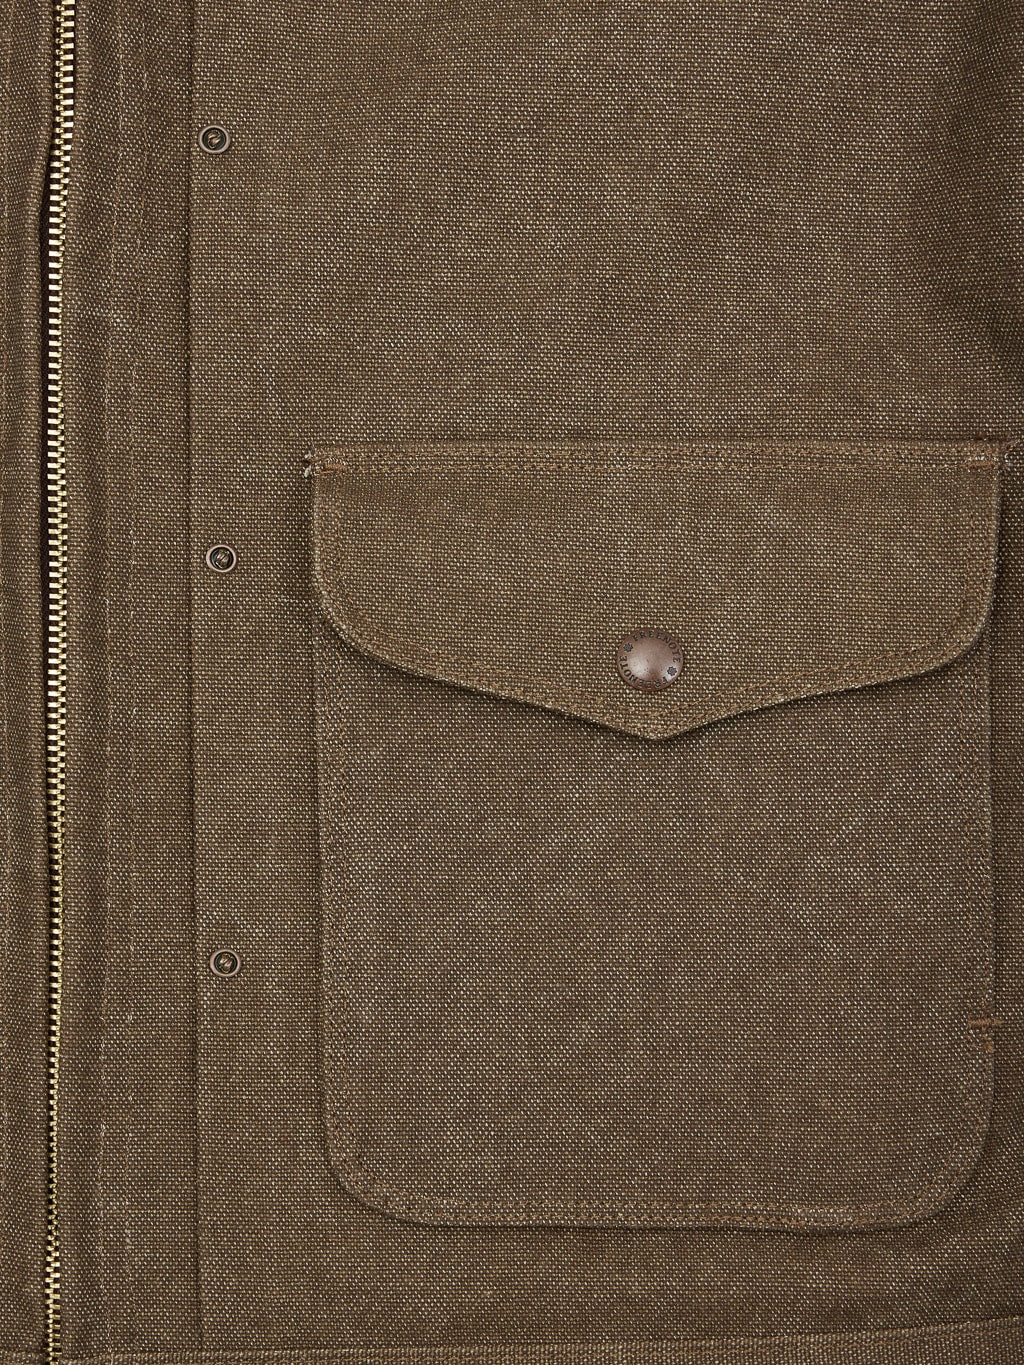 Freenote Cloth CD 4 Jacket Brown front pocket